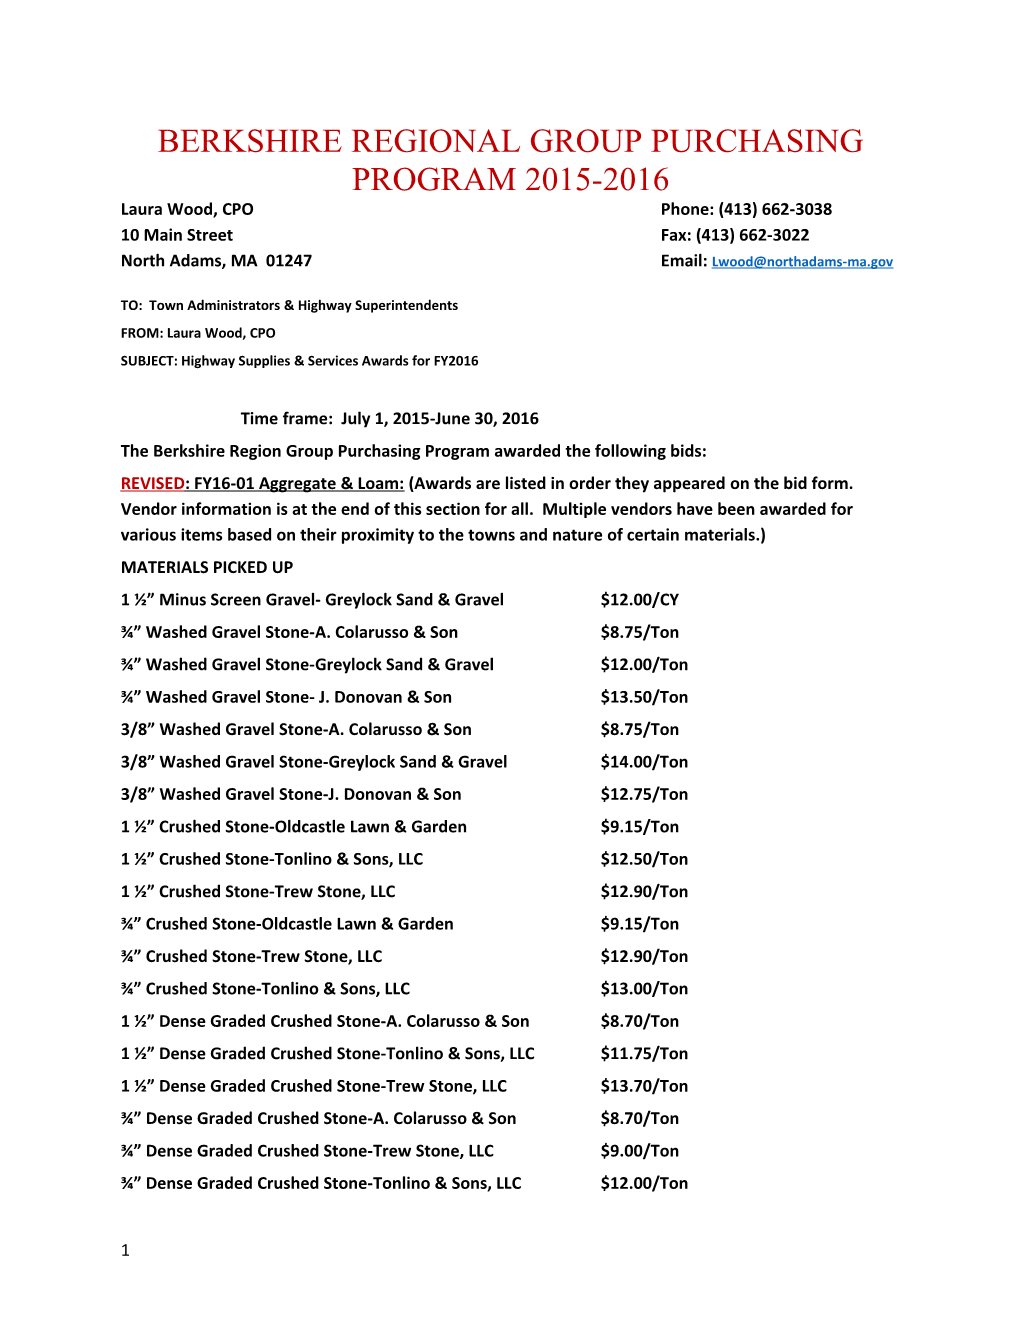 Berkshire Regional Group Purchasing Program 2015-2016